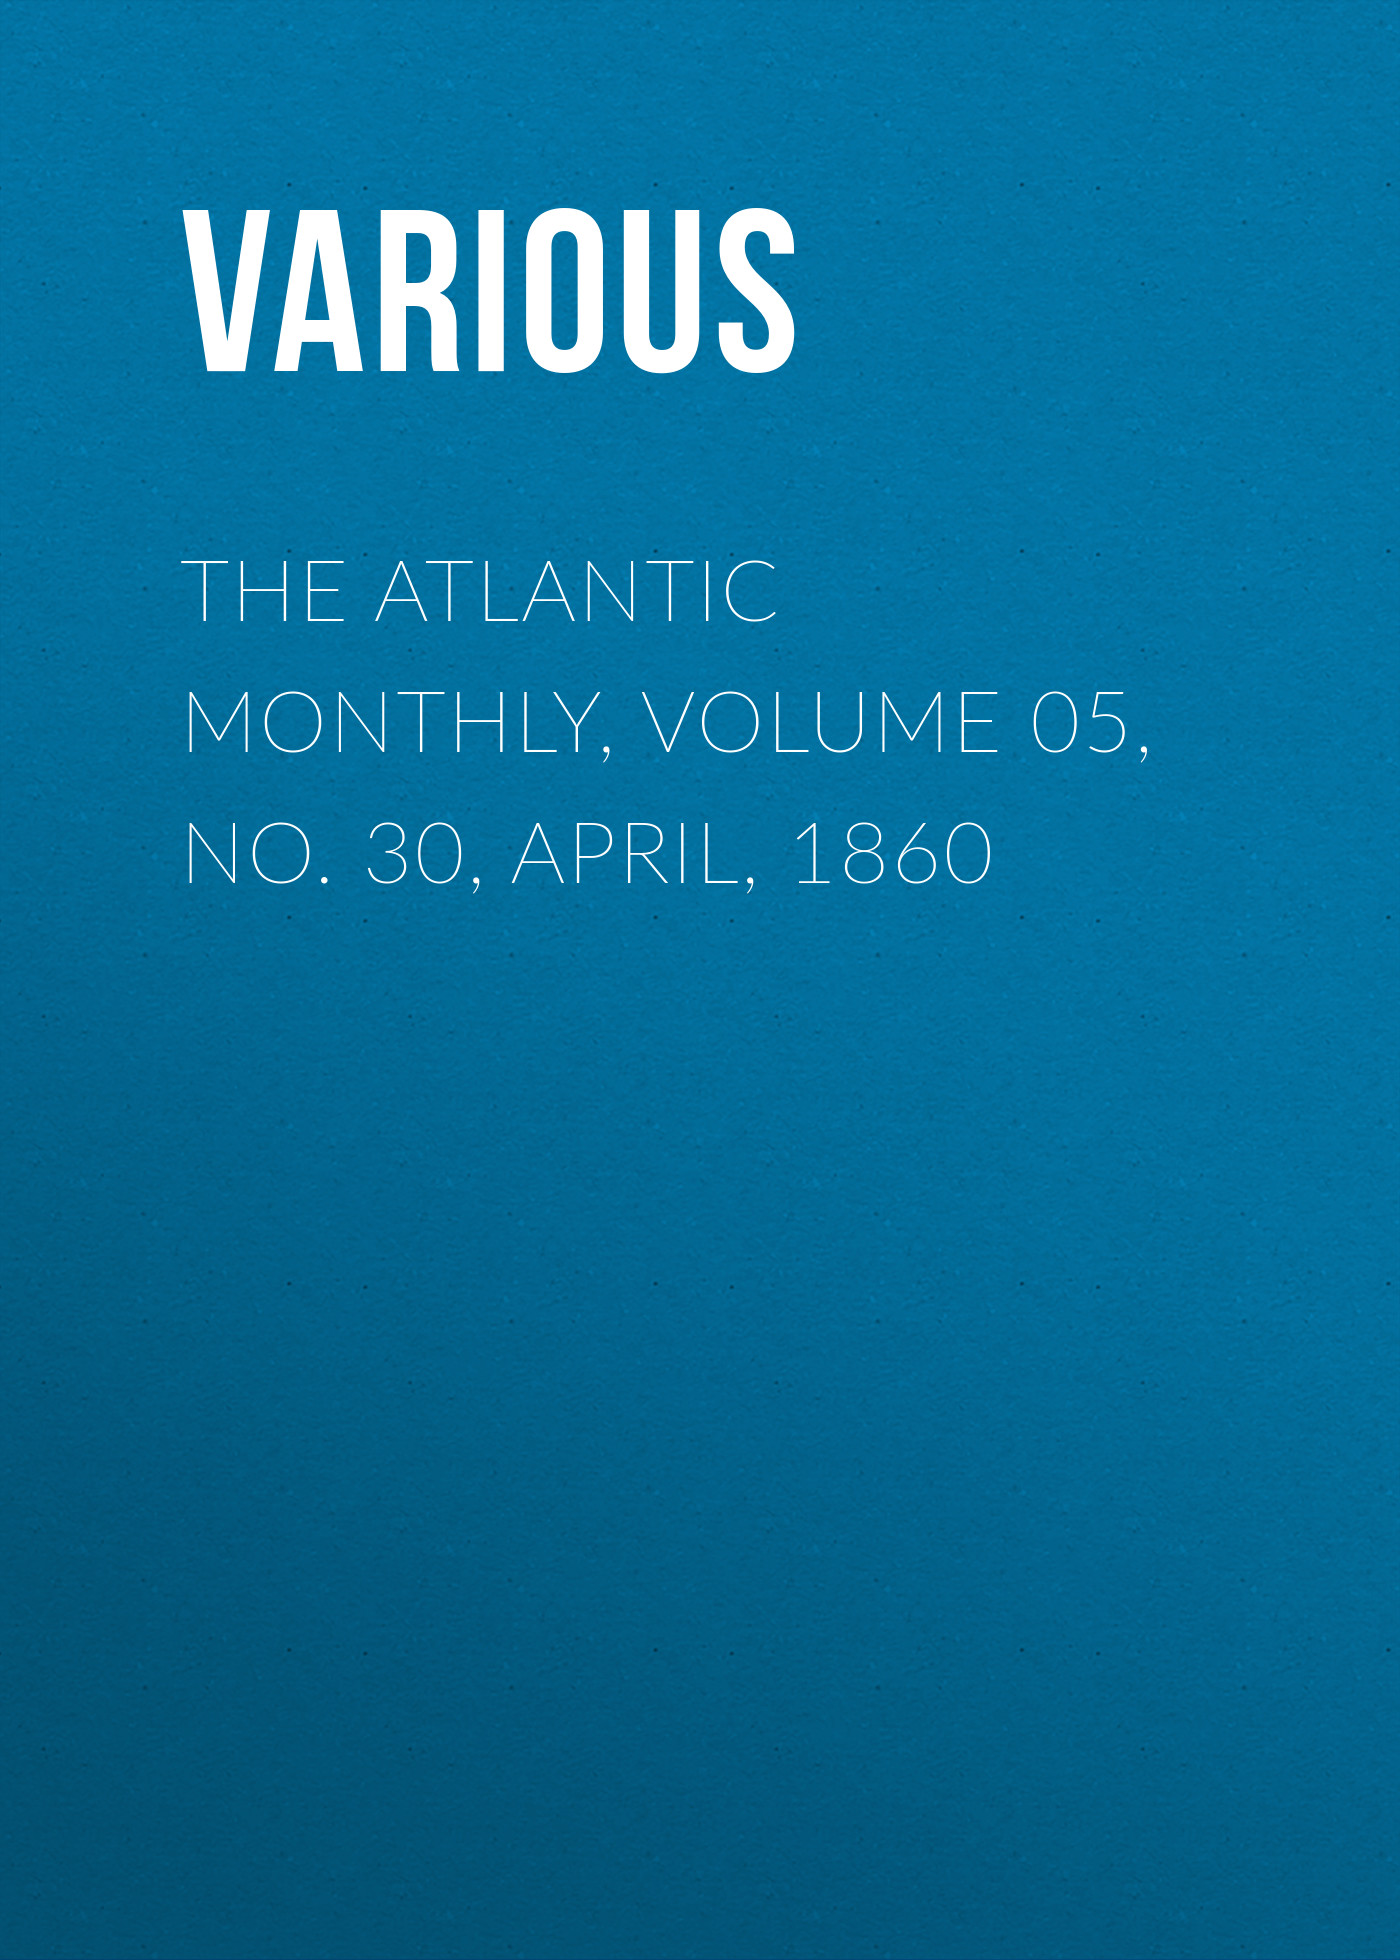 The Atlantic Monthly, Volume 05, No. 30, April, 1860